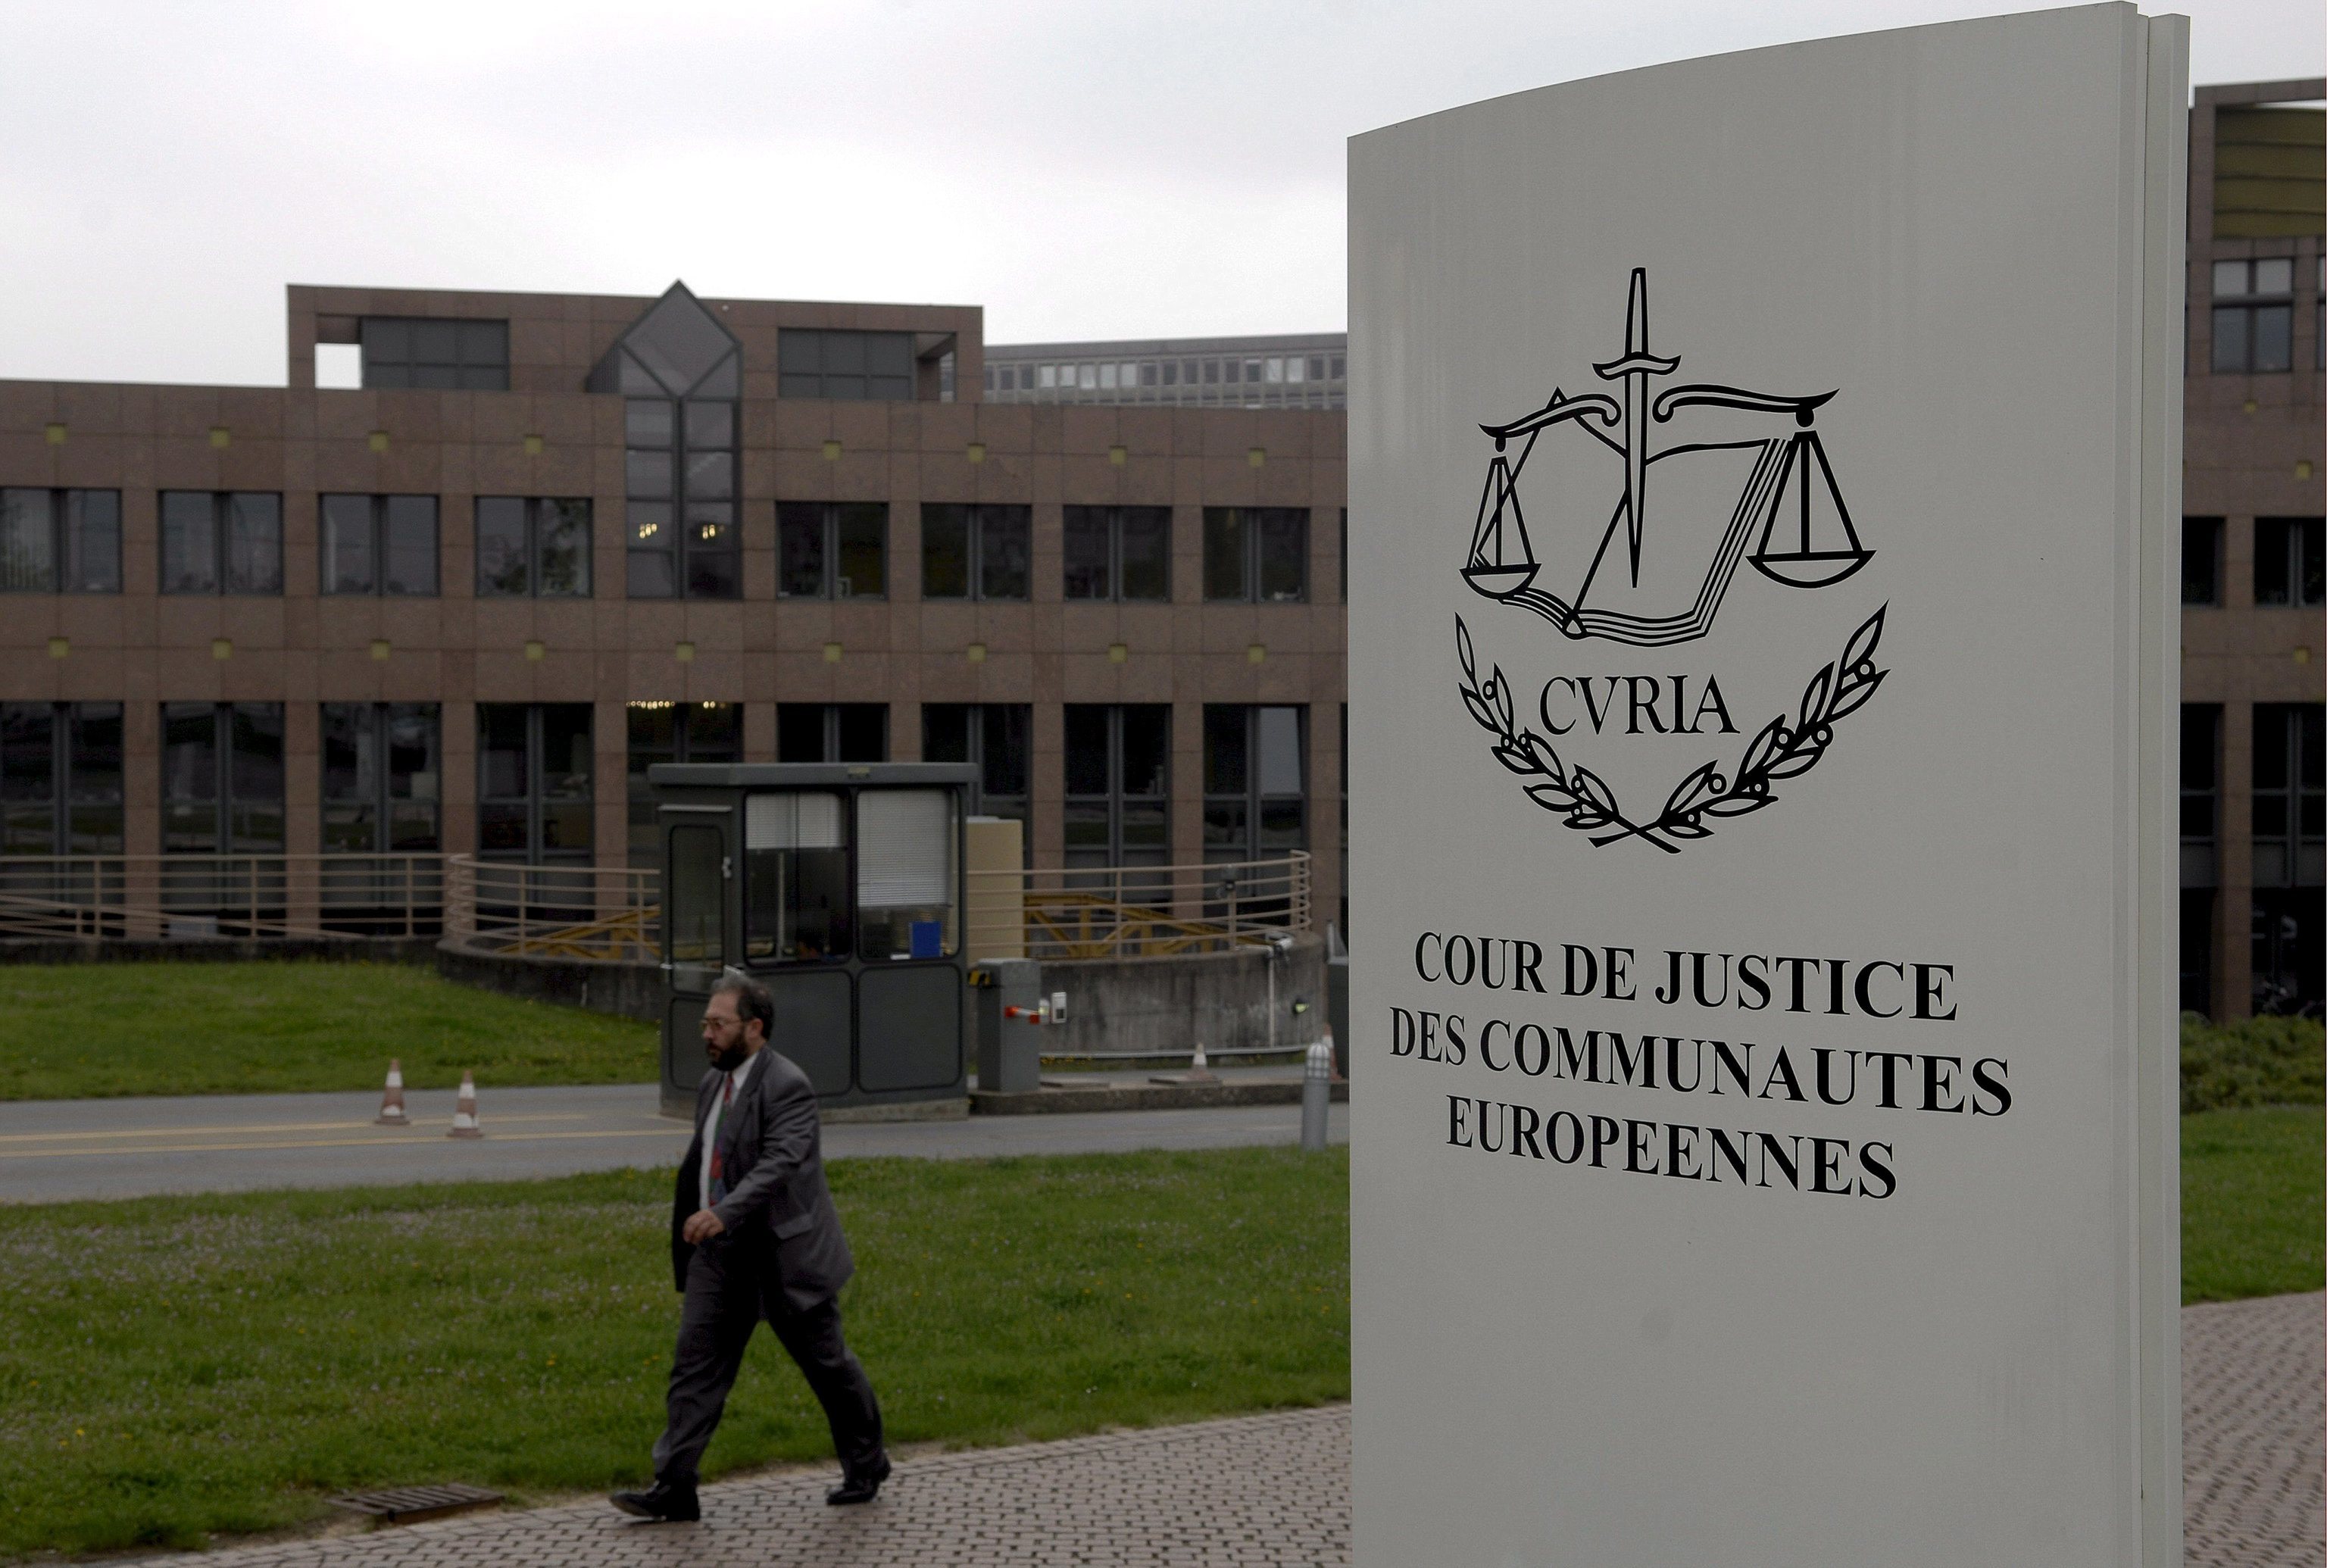 Tribunal de Justicia de la UE.